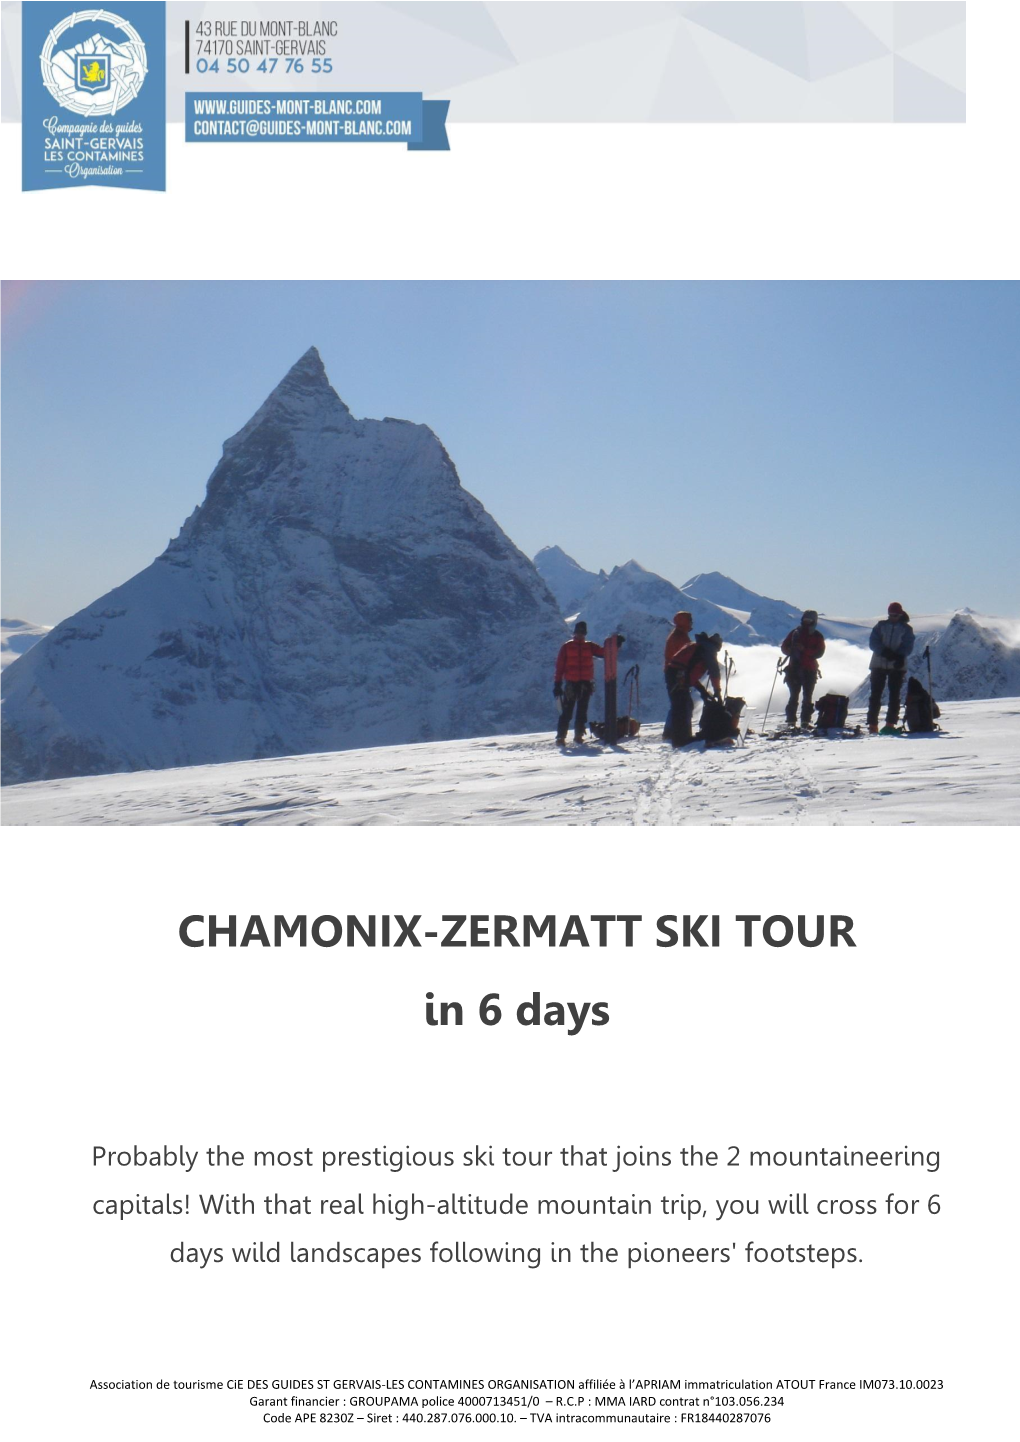 CHAMONIX-ZERMATT SKI TOUR in 6 Days